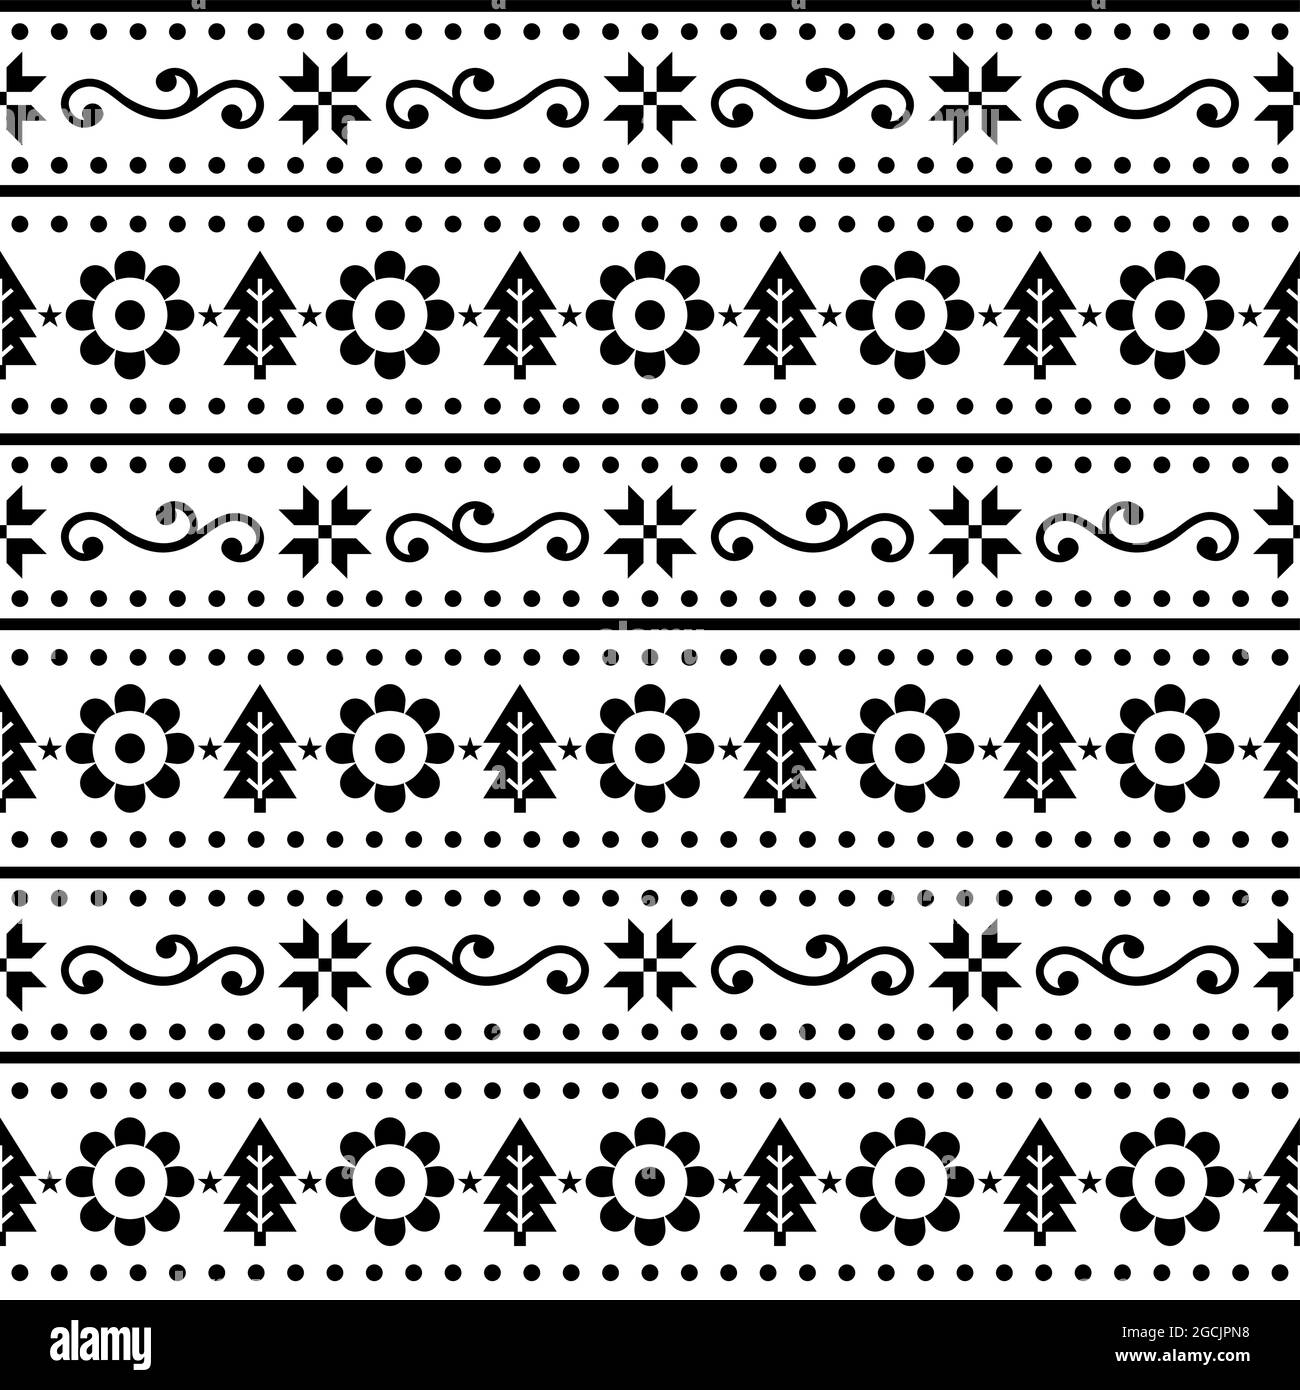 Christmas Scandinavain folk art vector seamless pattern, Nordic festive design with snowflakes, flowers, Xmas trees in black on white background Stock Vector